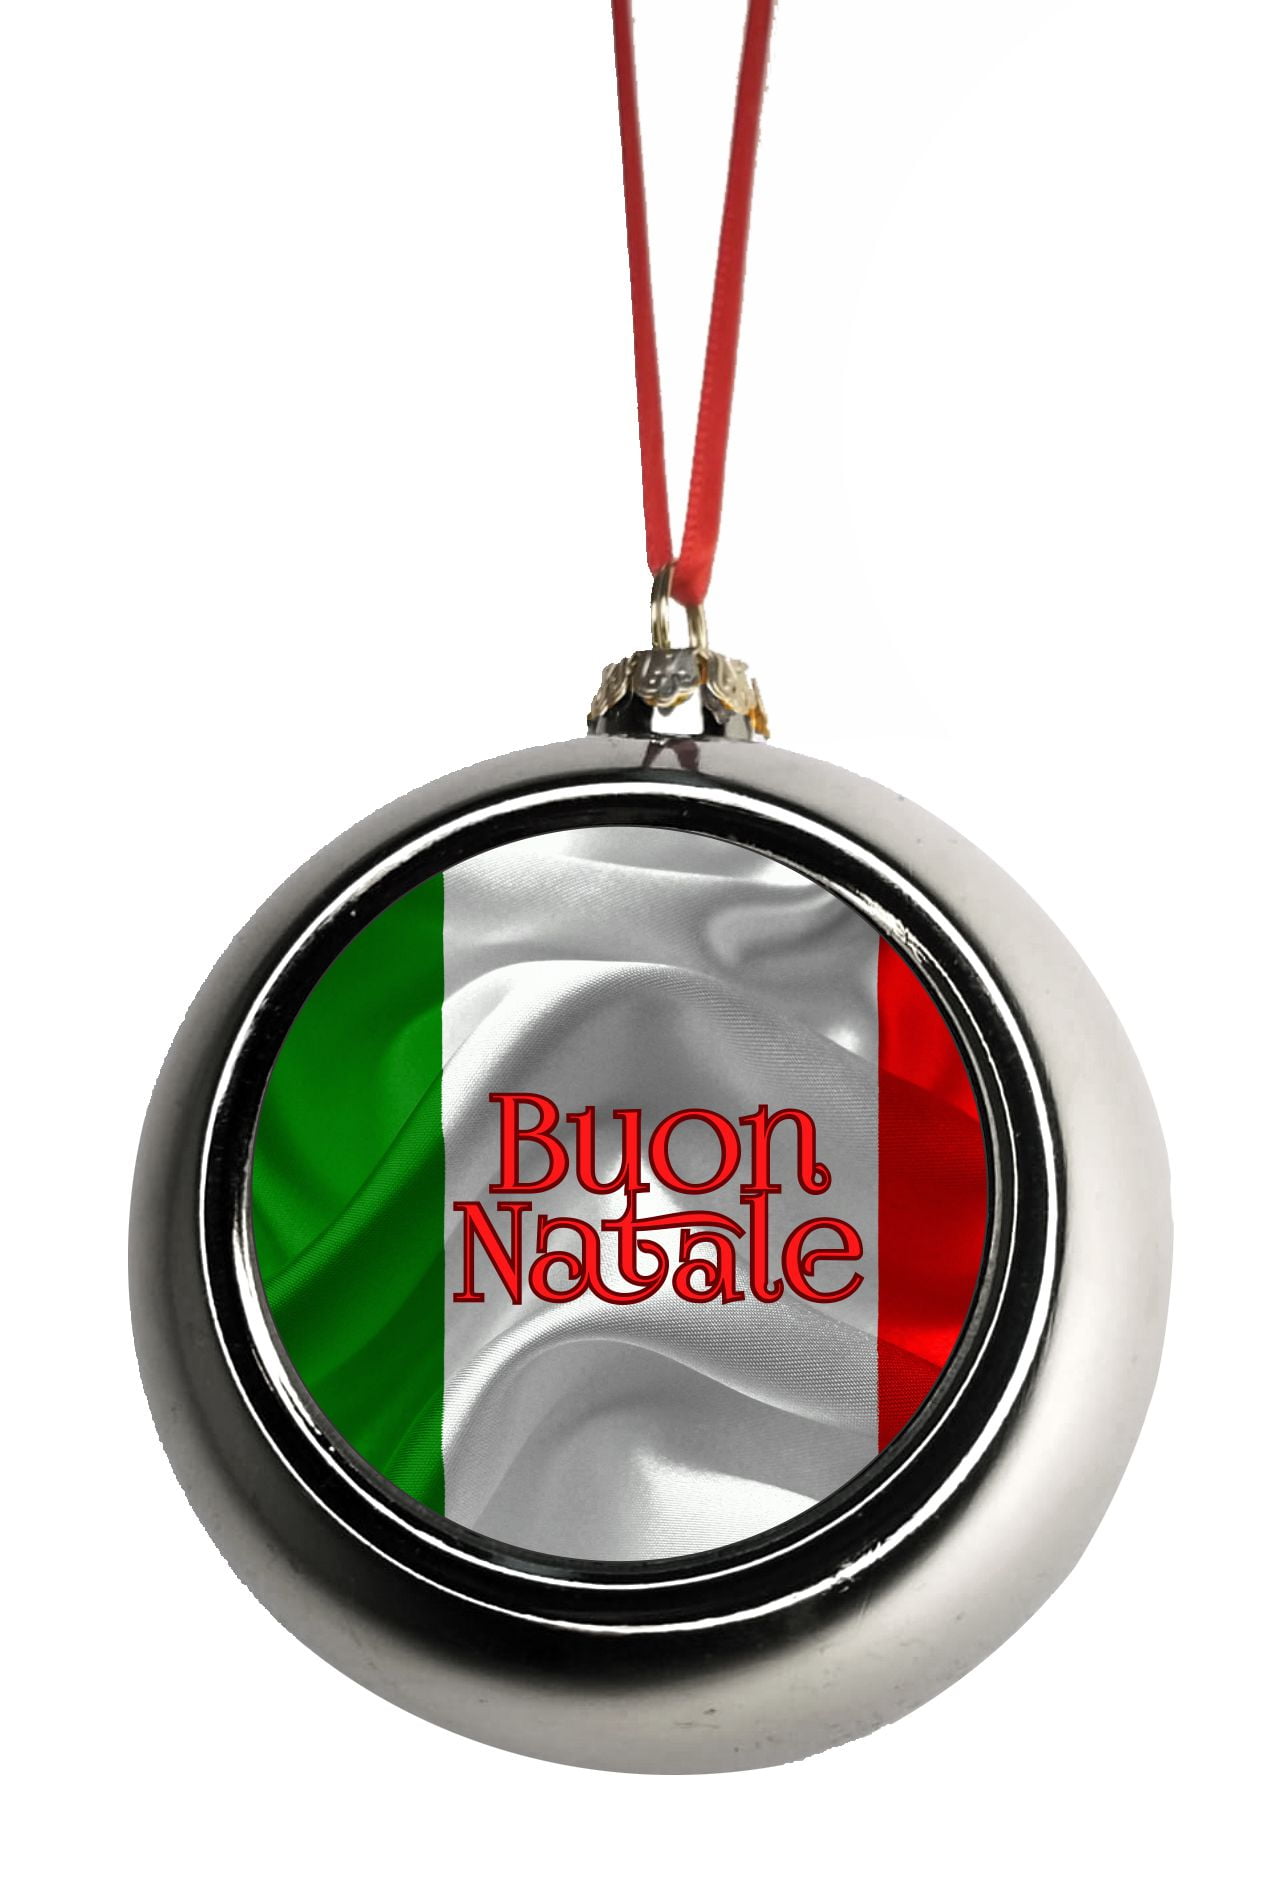 Buon Natale Yard Sign.Flag Italy Buon Natale Ornaments Silver Bauble Christmas Ornament Balls Walmart Com Walmart Com